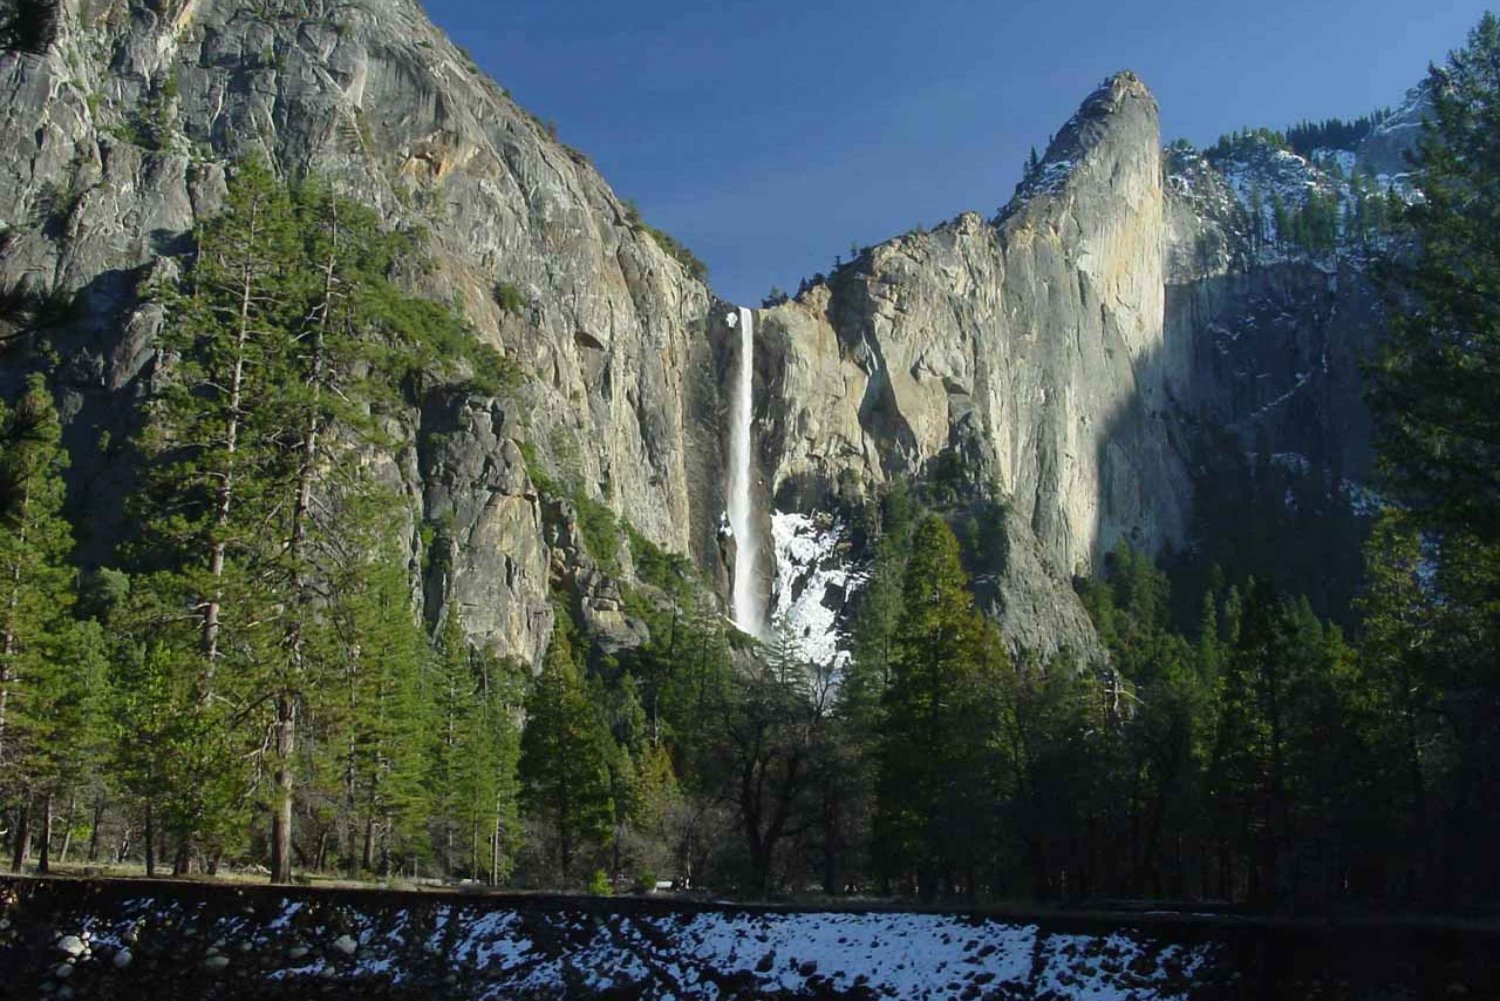 From SFO-Yosemite National Park-Enchanting Full Day Tour